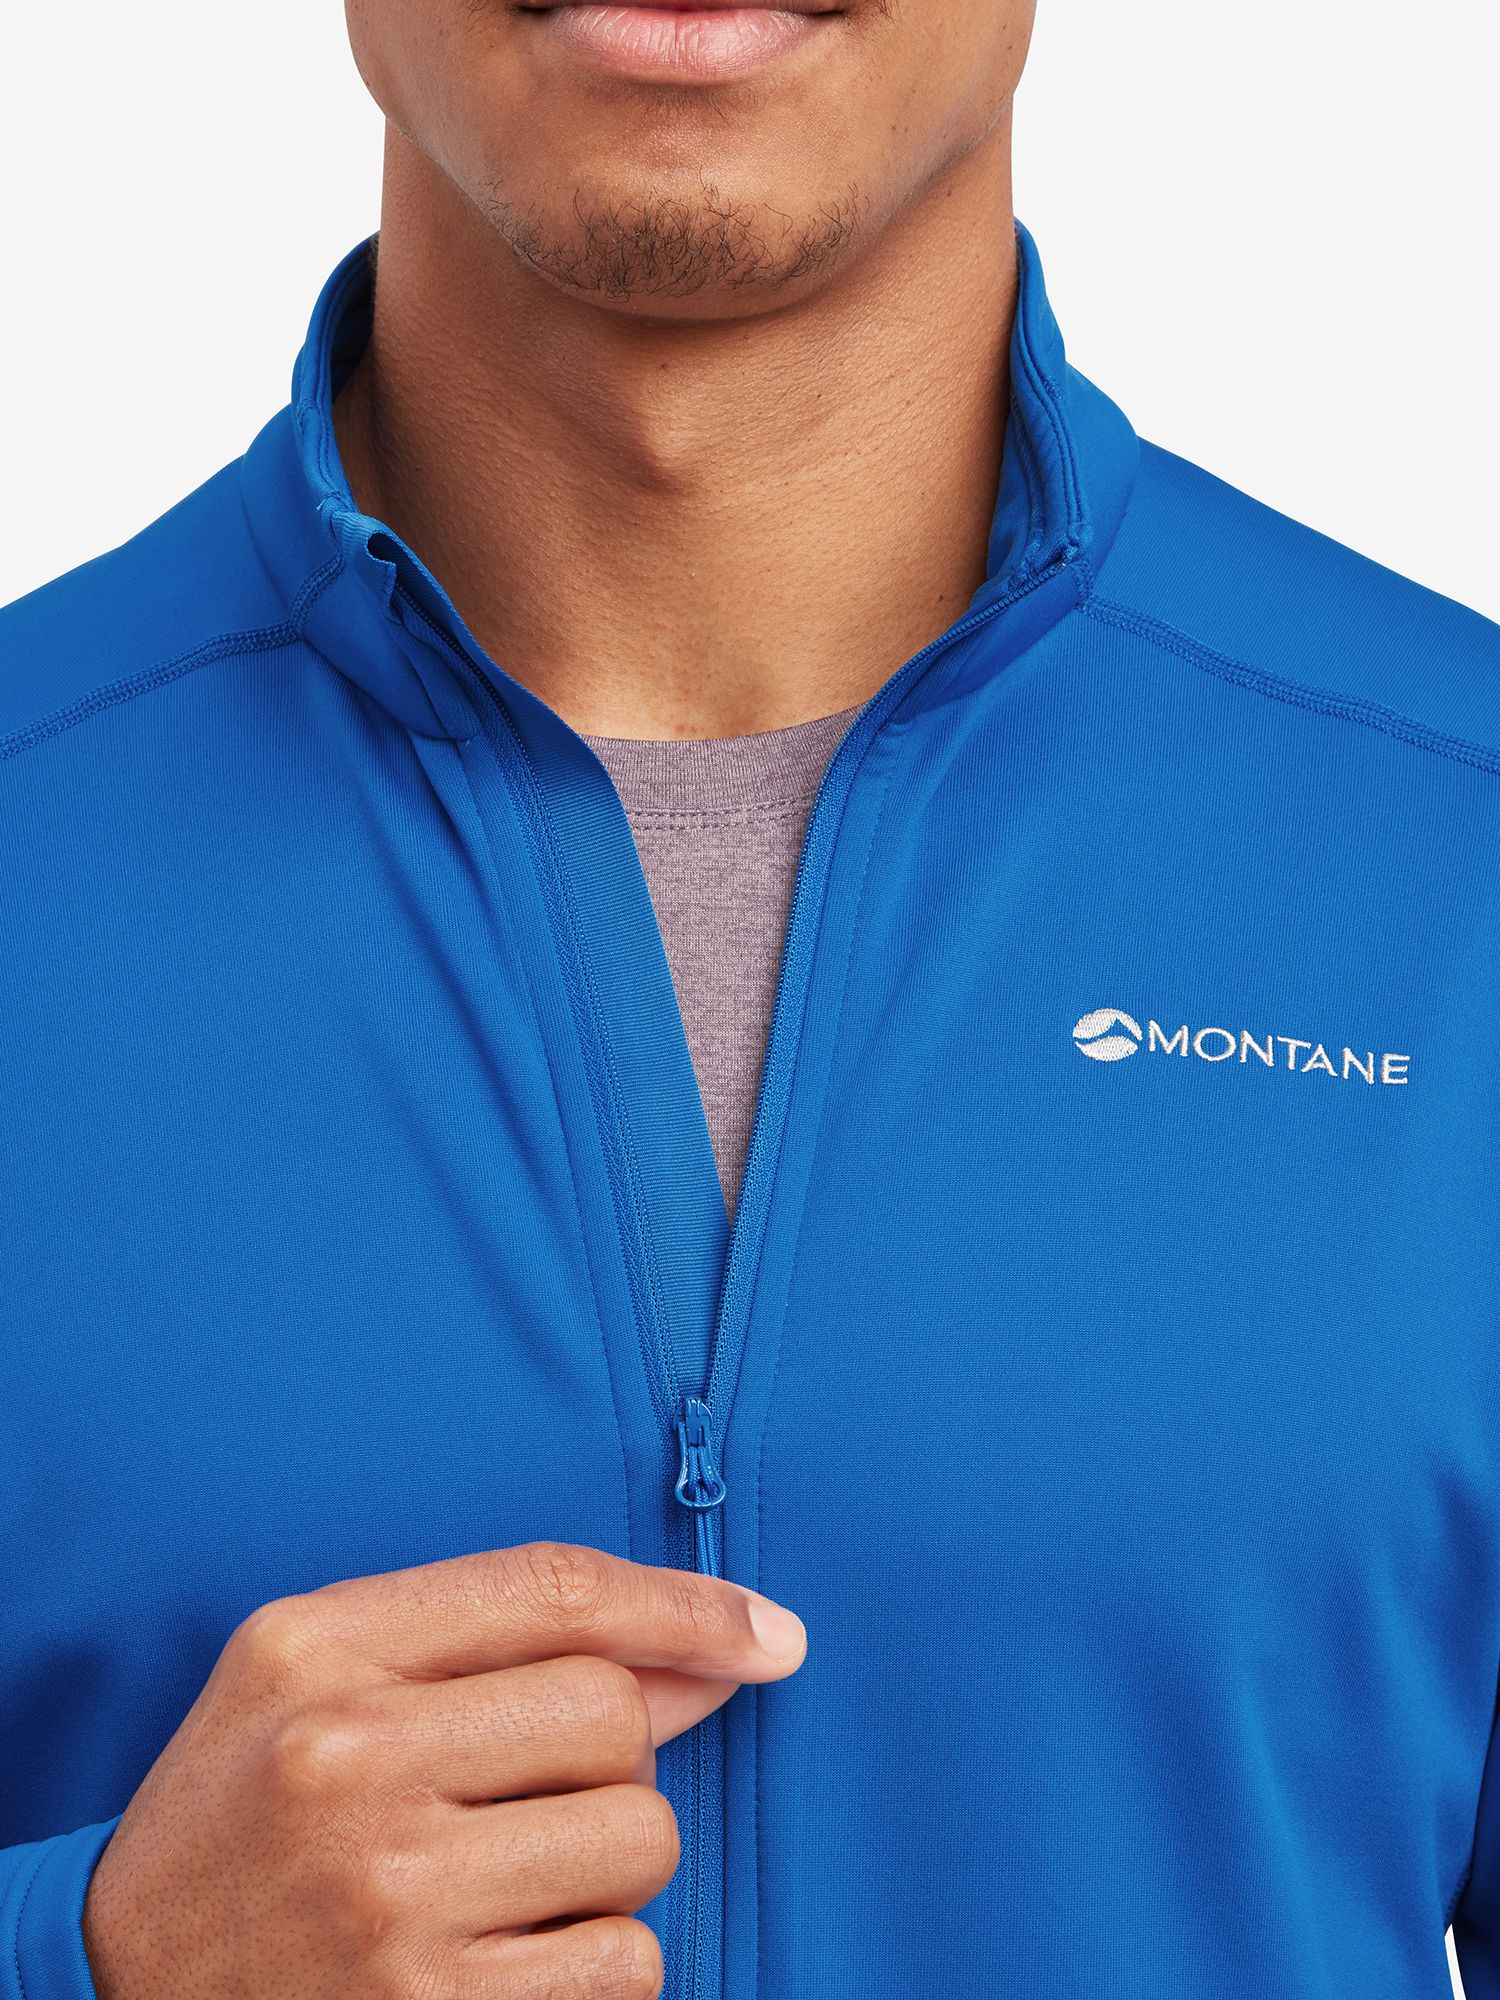 Montane Fury Lite Jacket, Neptune Blue, S